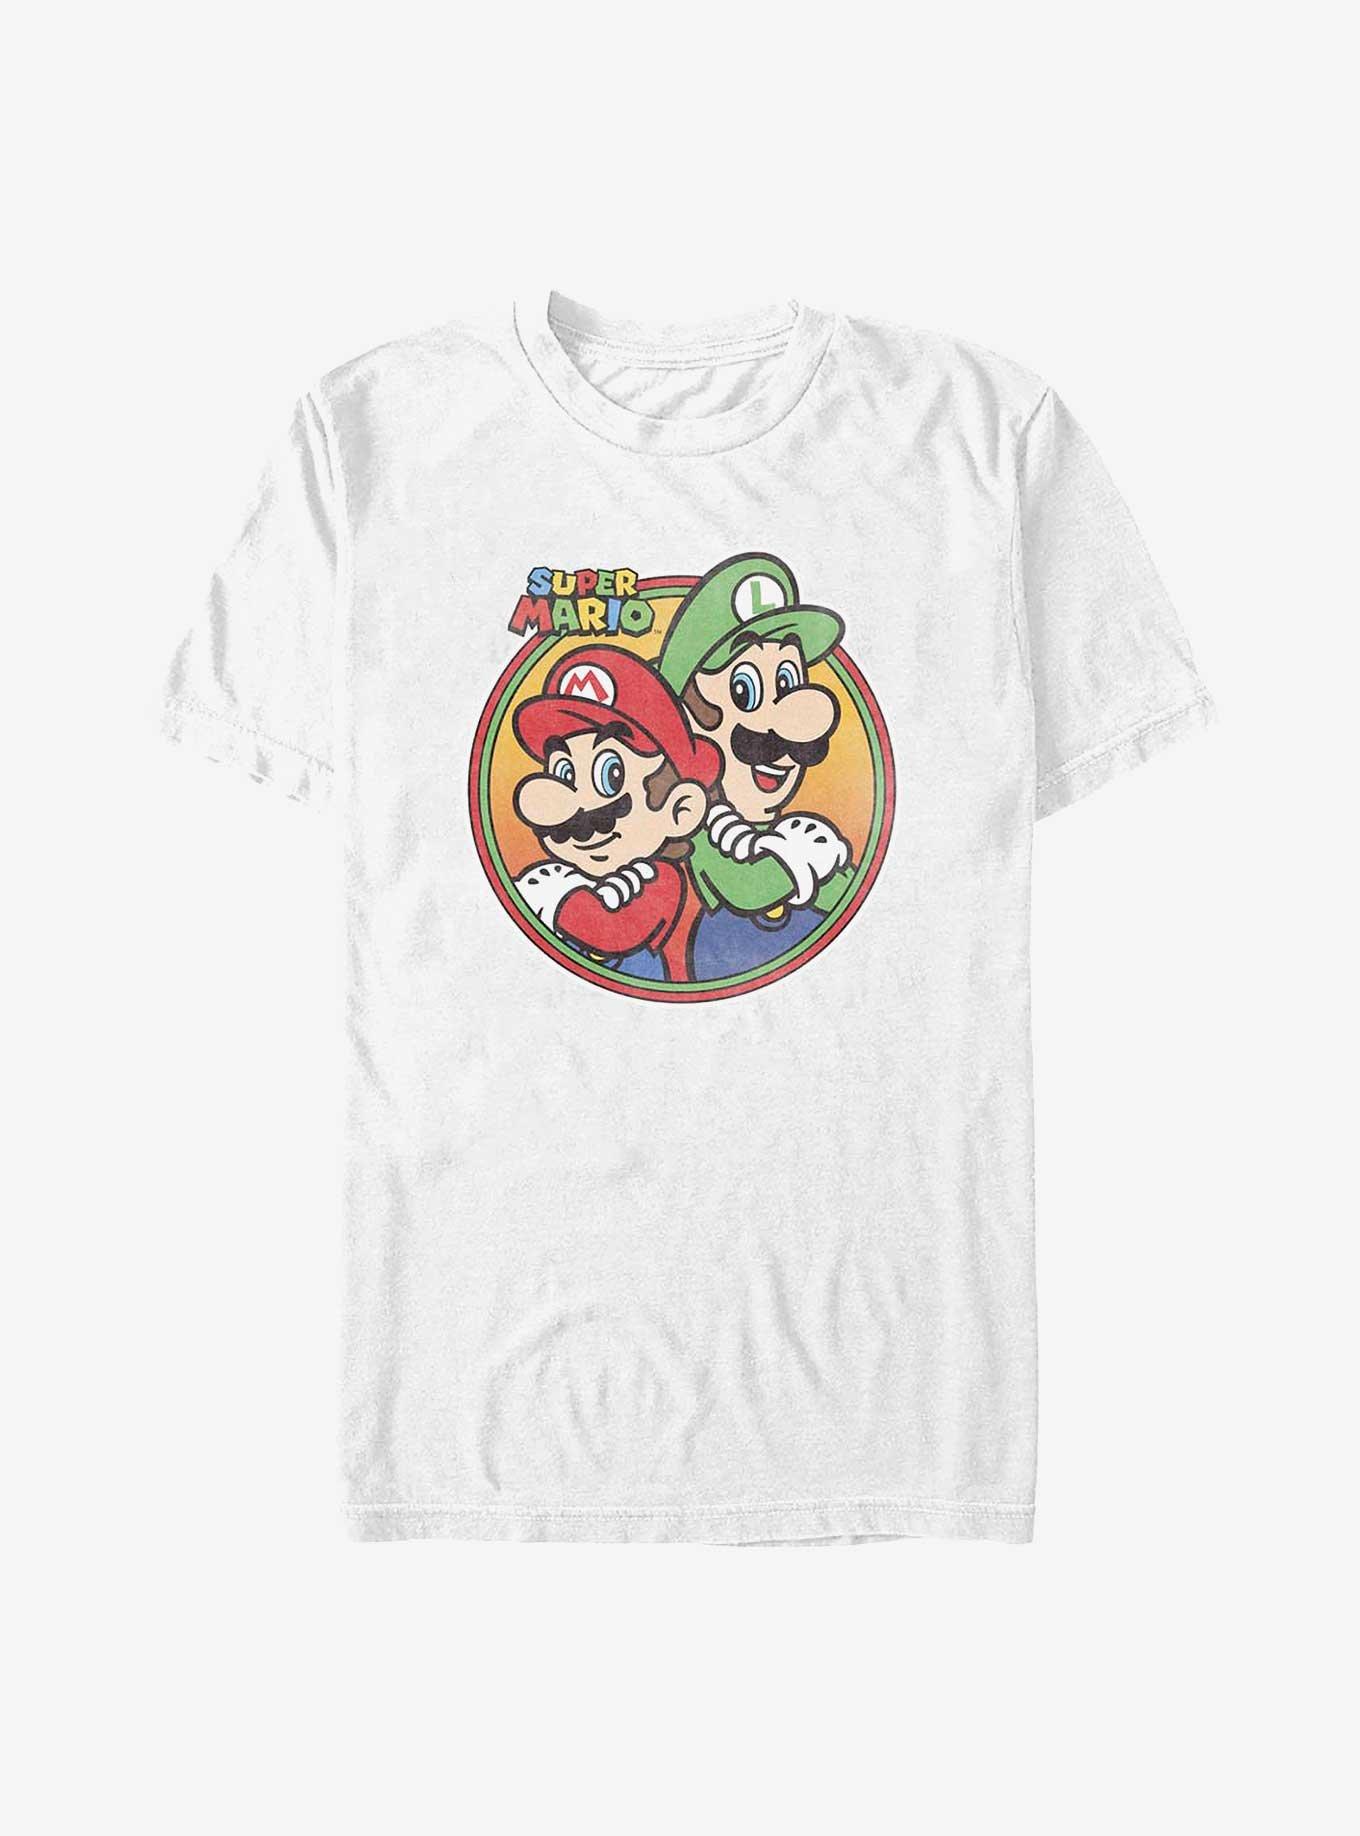 Nintendo Super Mario Bros Mario and Luigi T-Shirt - WHITE | Hot Topic